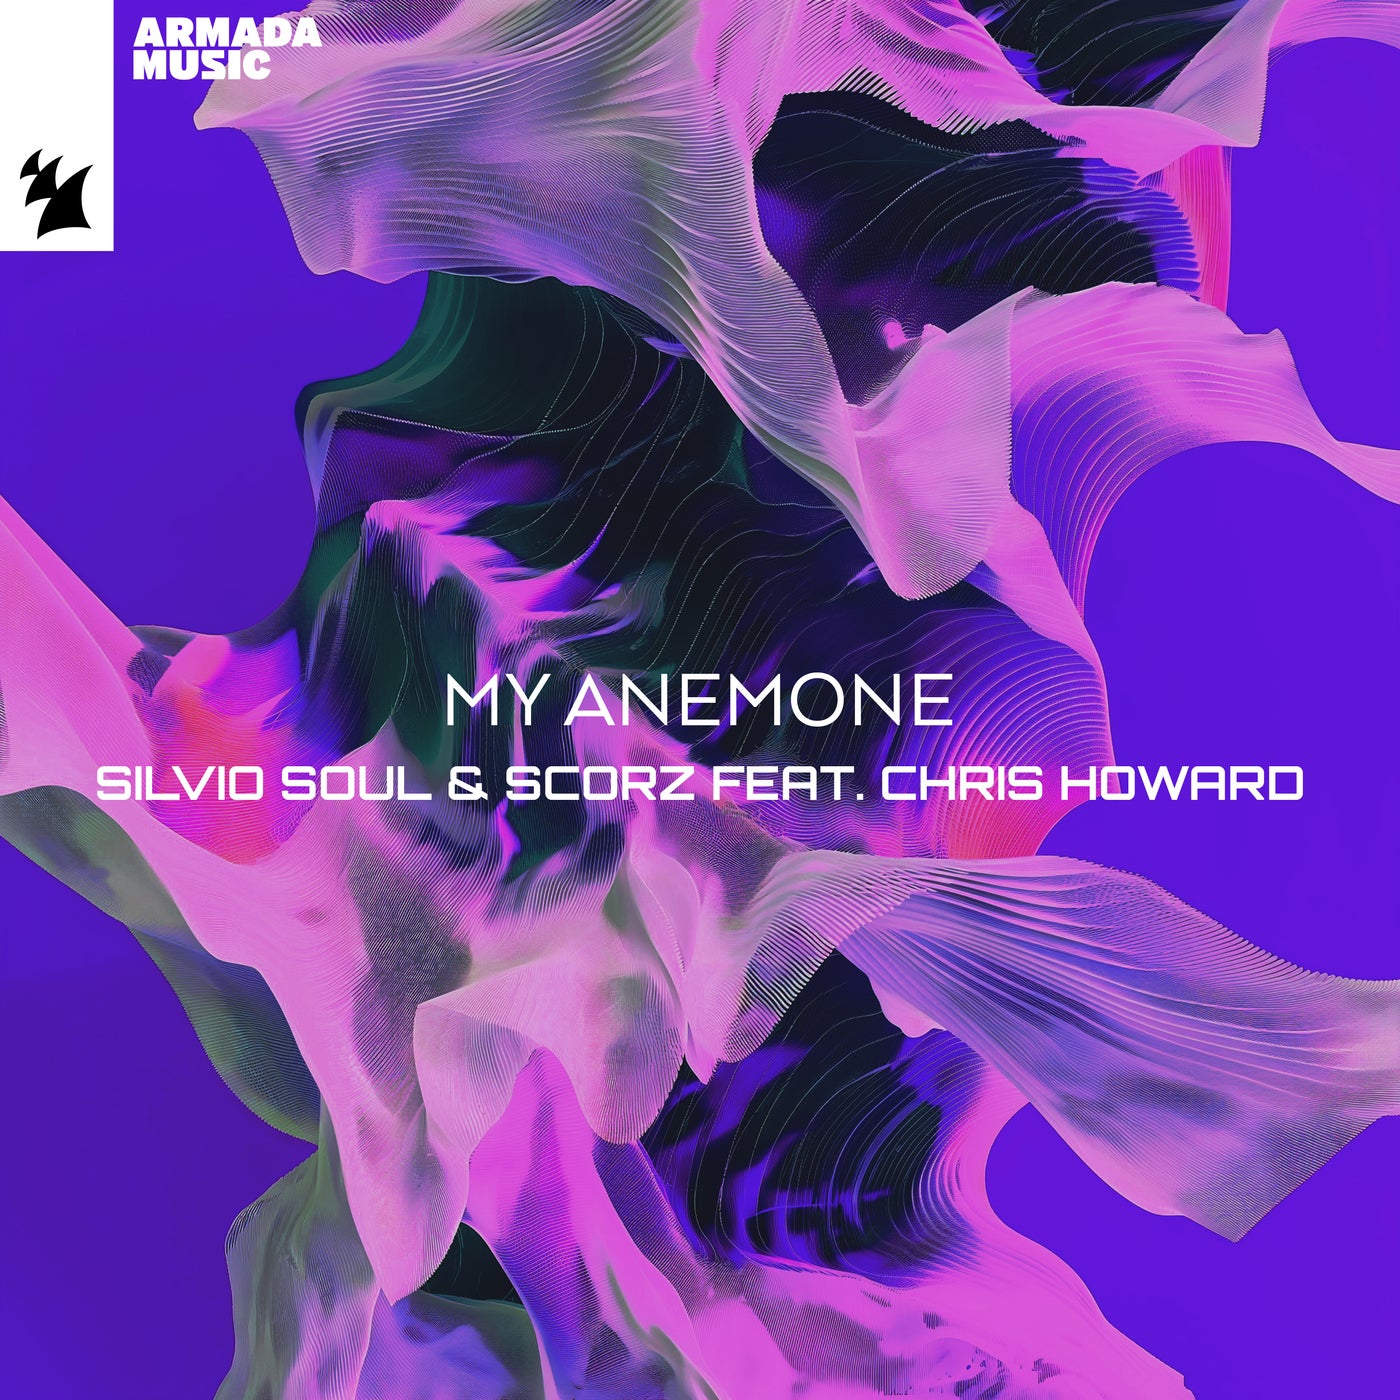 image cover: Silvio Soul, Scorz, Chris Howard - My Anemone on Armada Music